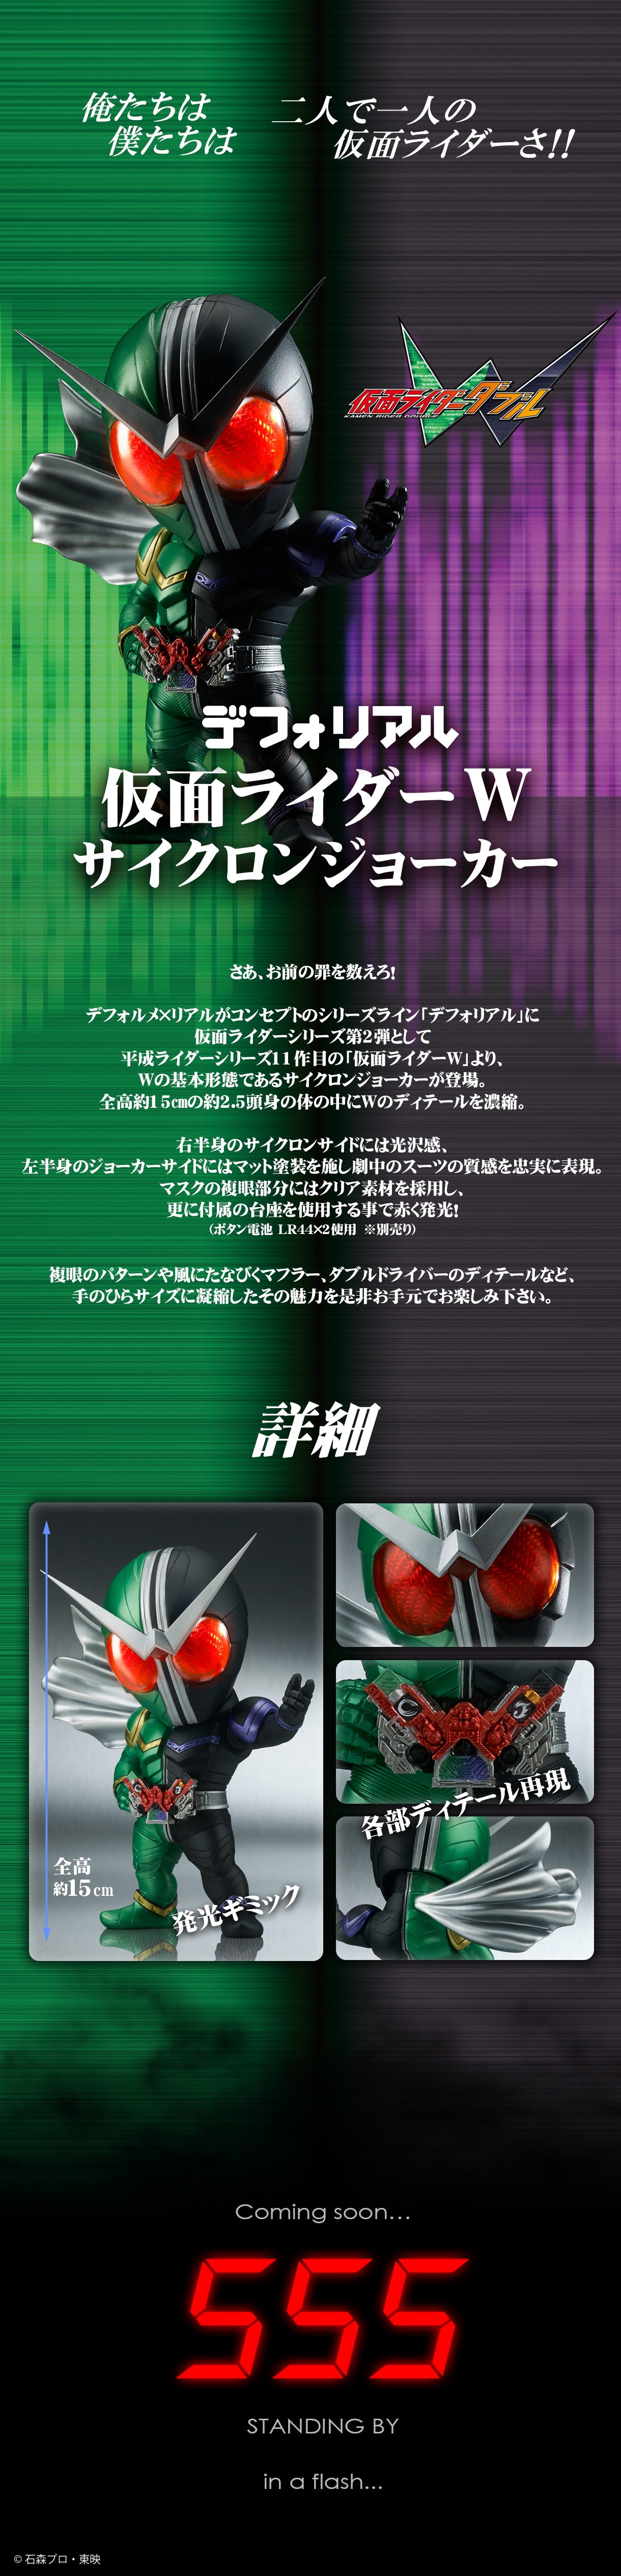 Ultraman Tiga, Dyna, Gaia promotional picture